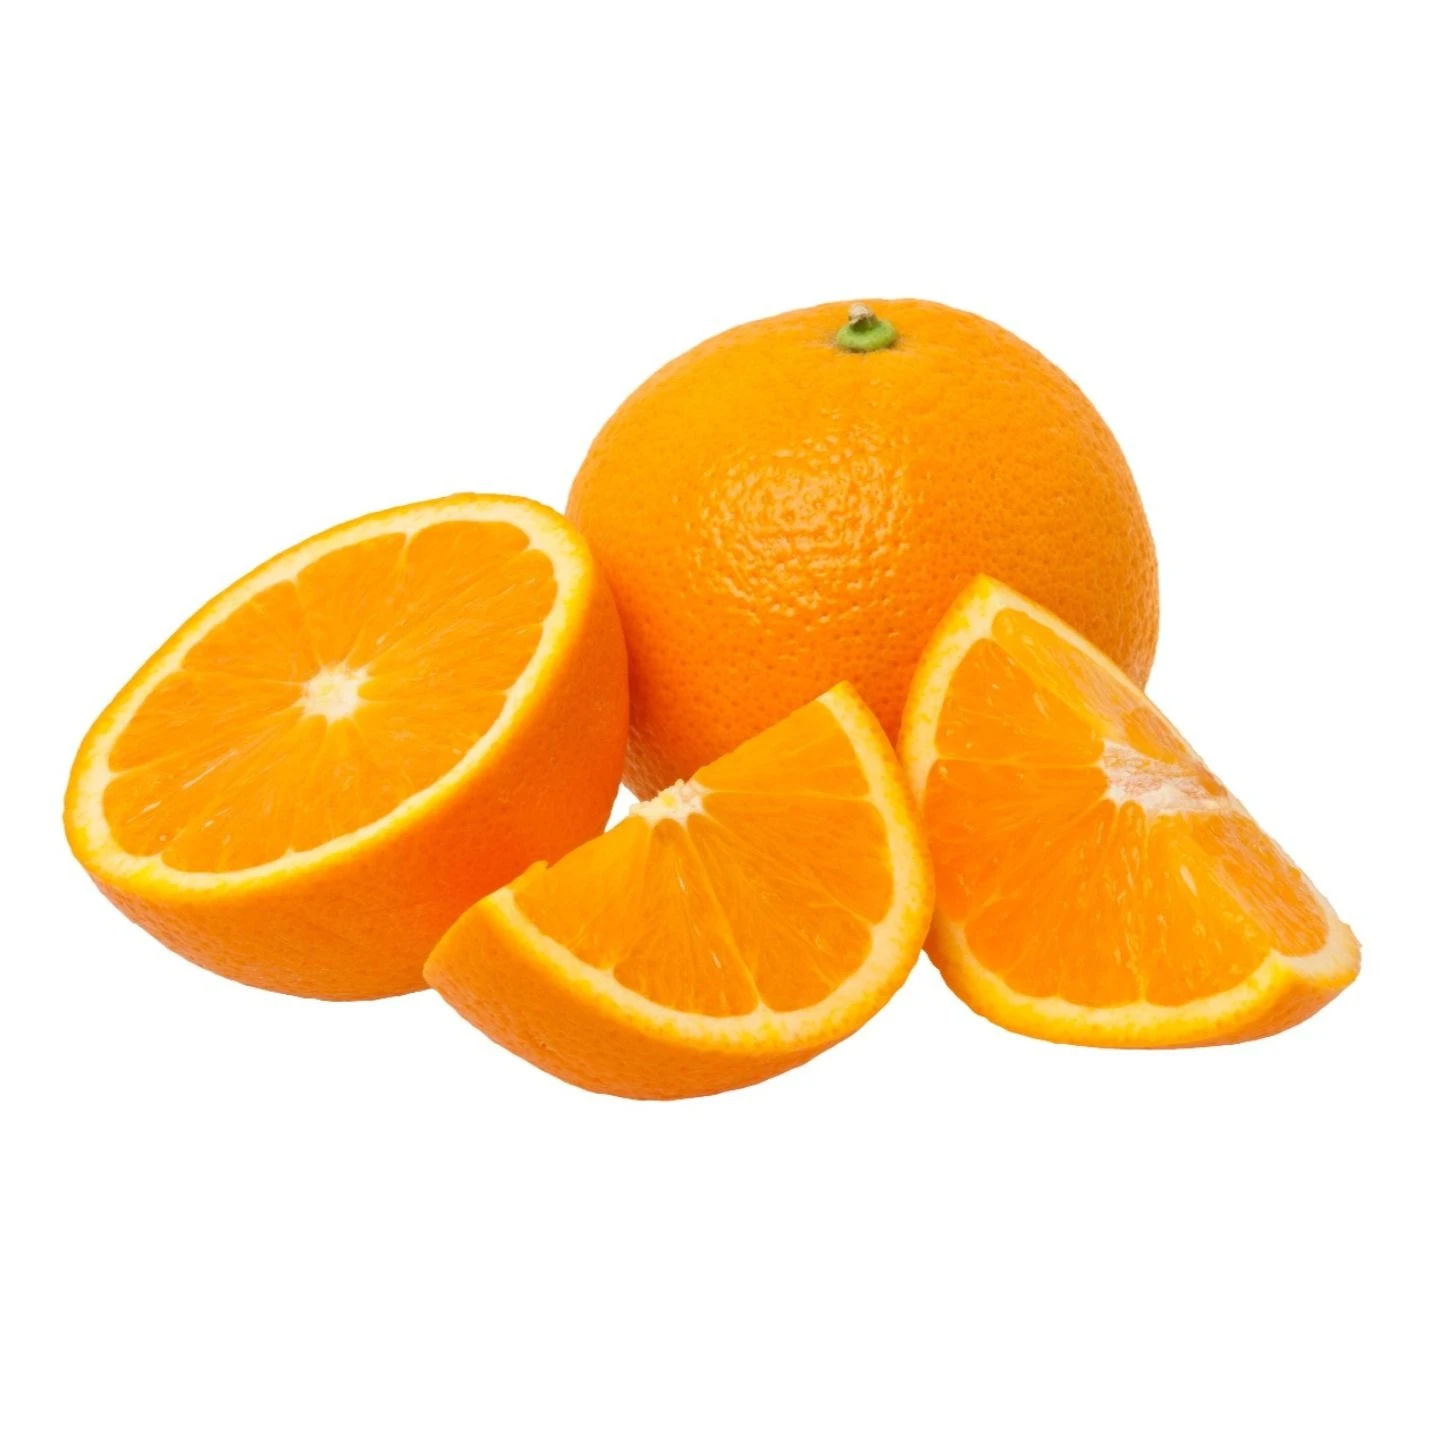 Купить лимон мандарин. Лимон и мандарин. Морской апельсин. Микро апельсин. Смесь лимона и мандарина.